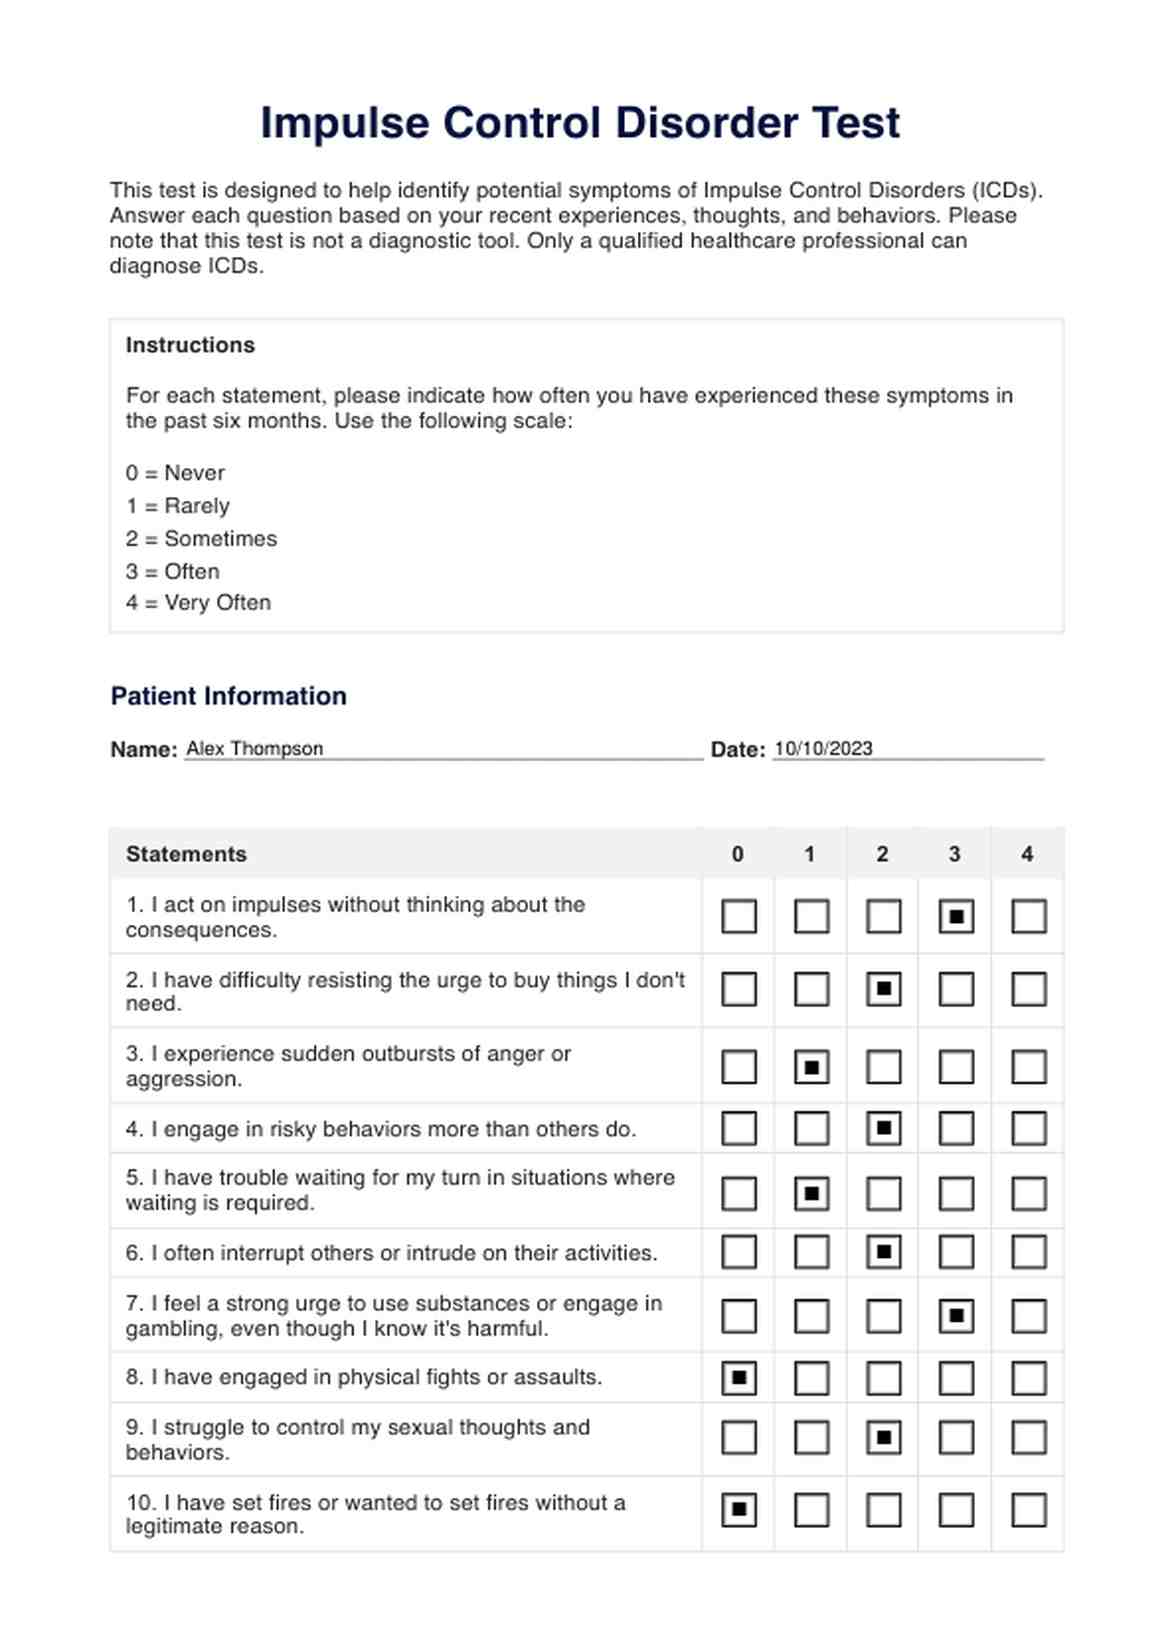 Impulse Control Disorder Test PDF Example